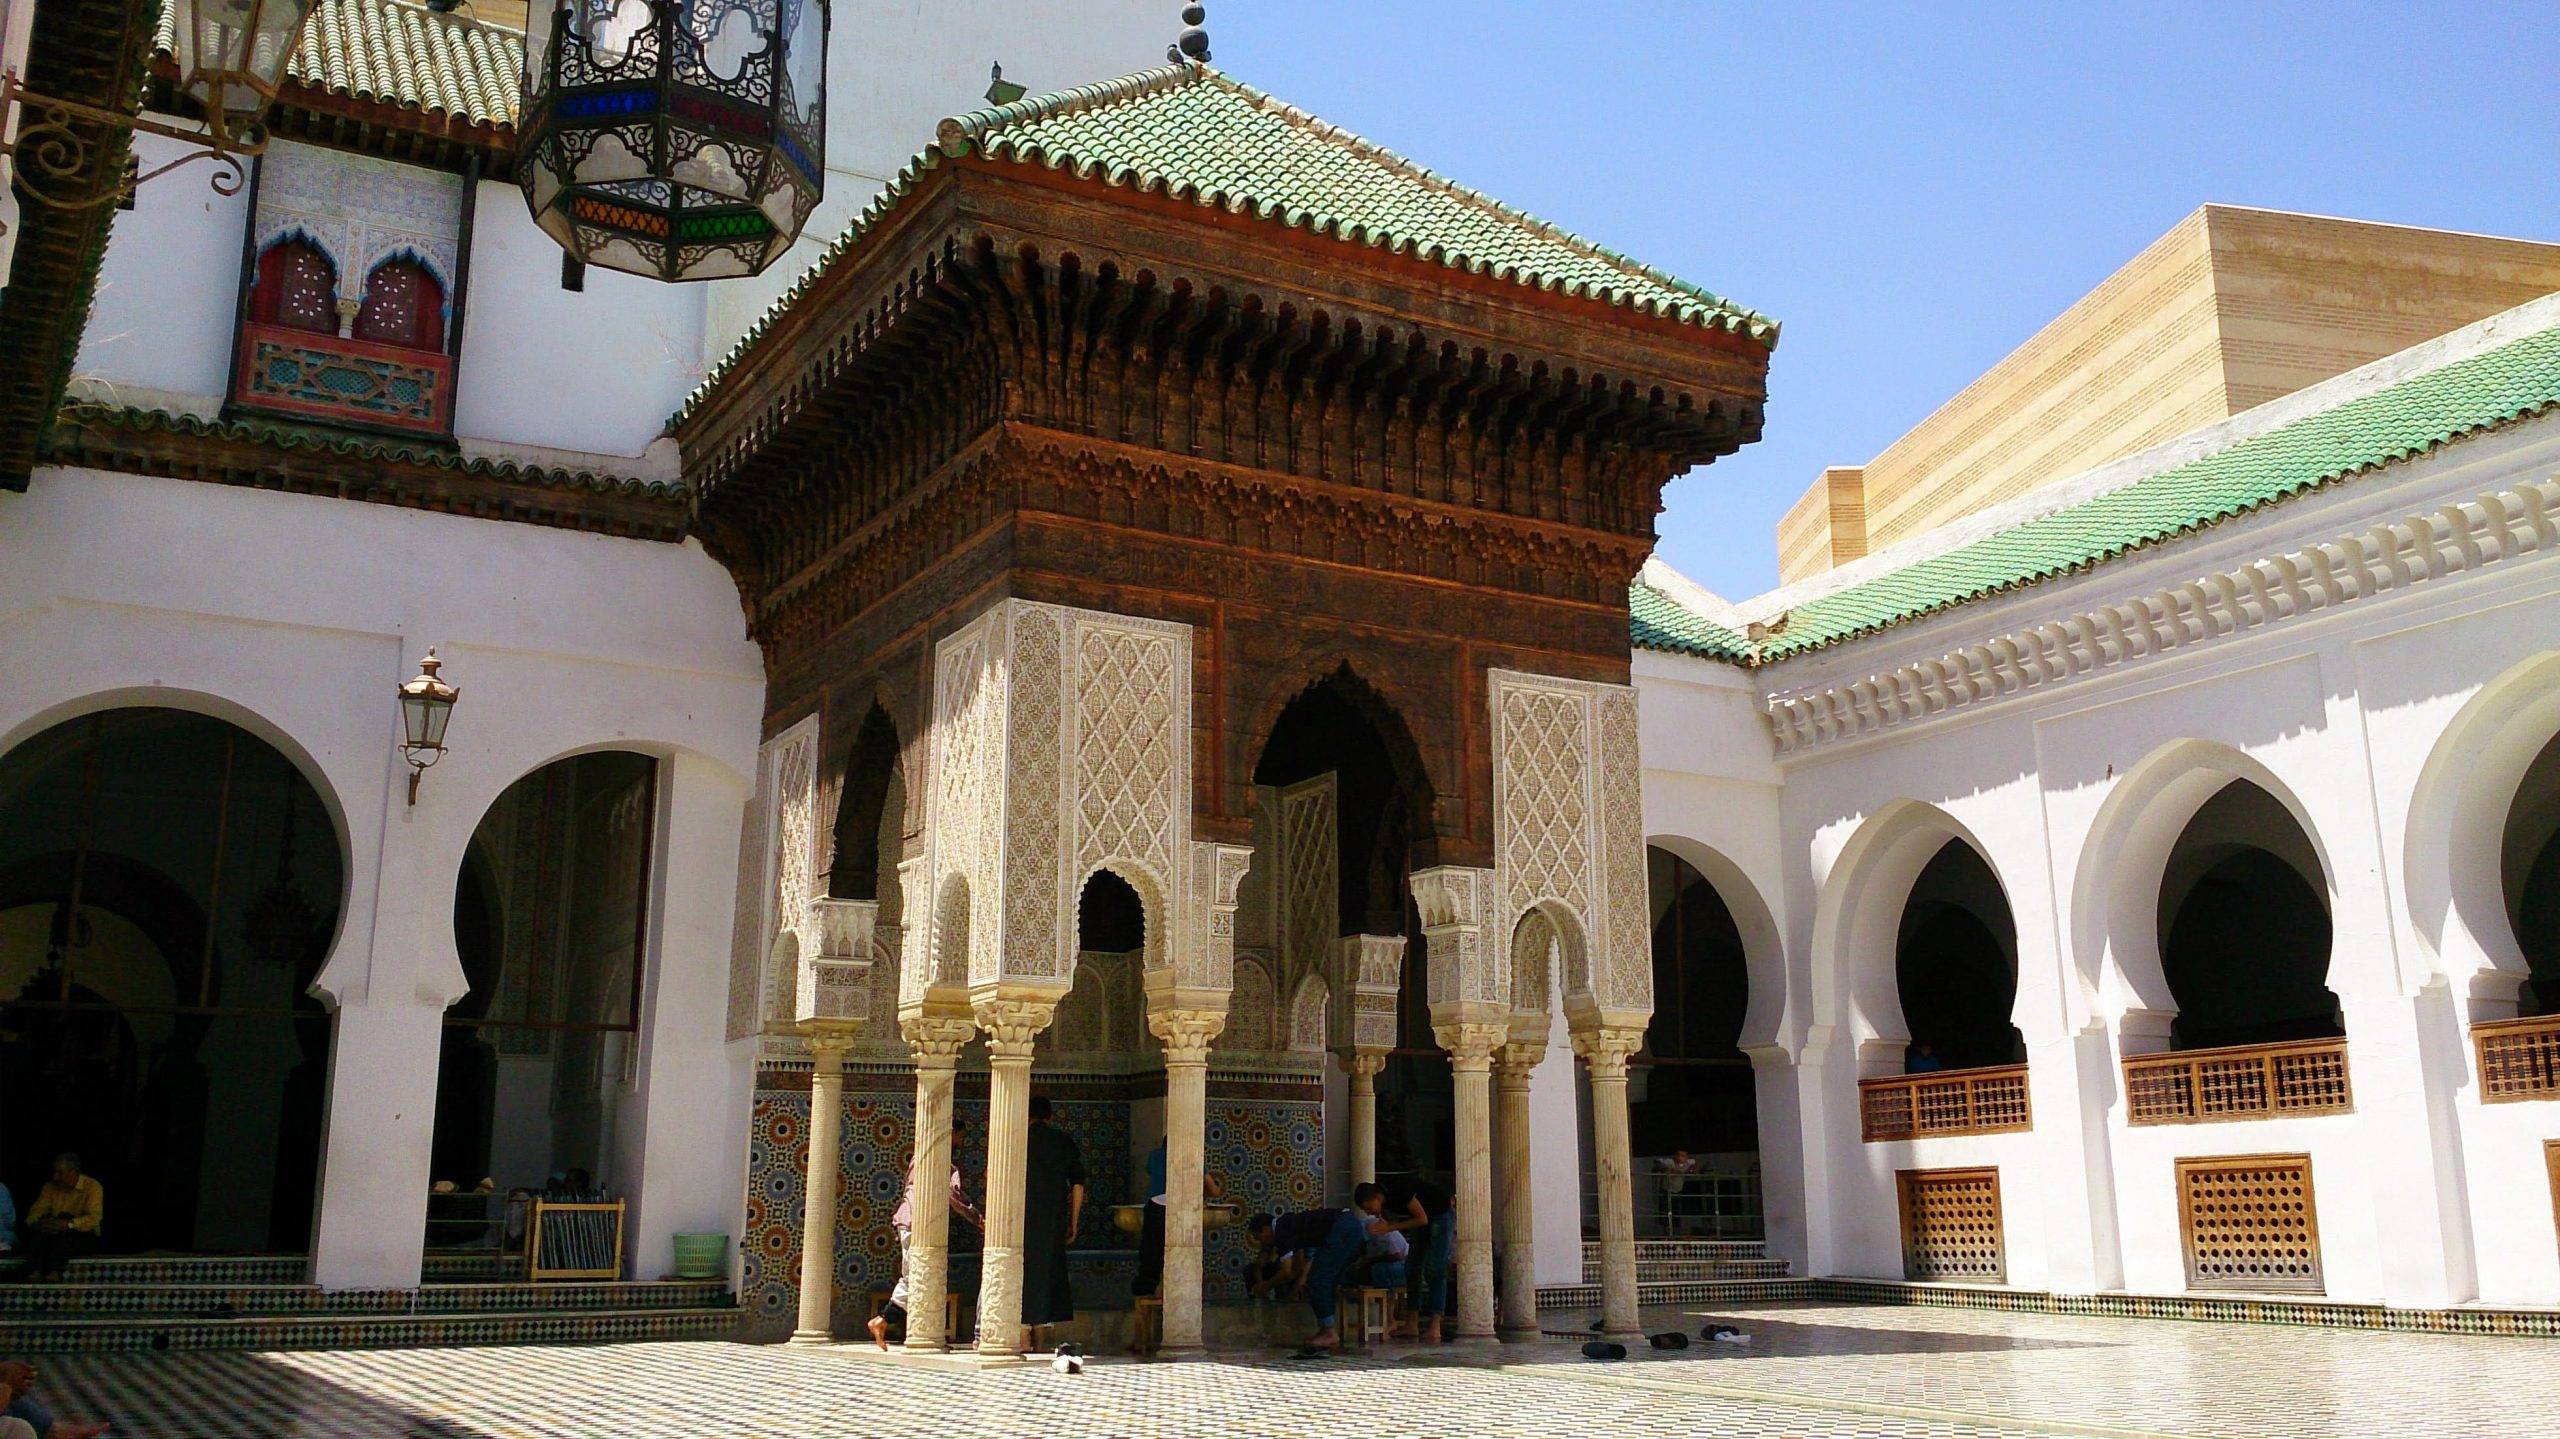 al-qarawiyyin-mosque-in-fez-the-oldest-university-2021-09-04-14-49-53-utc